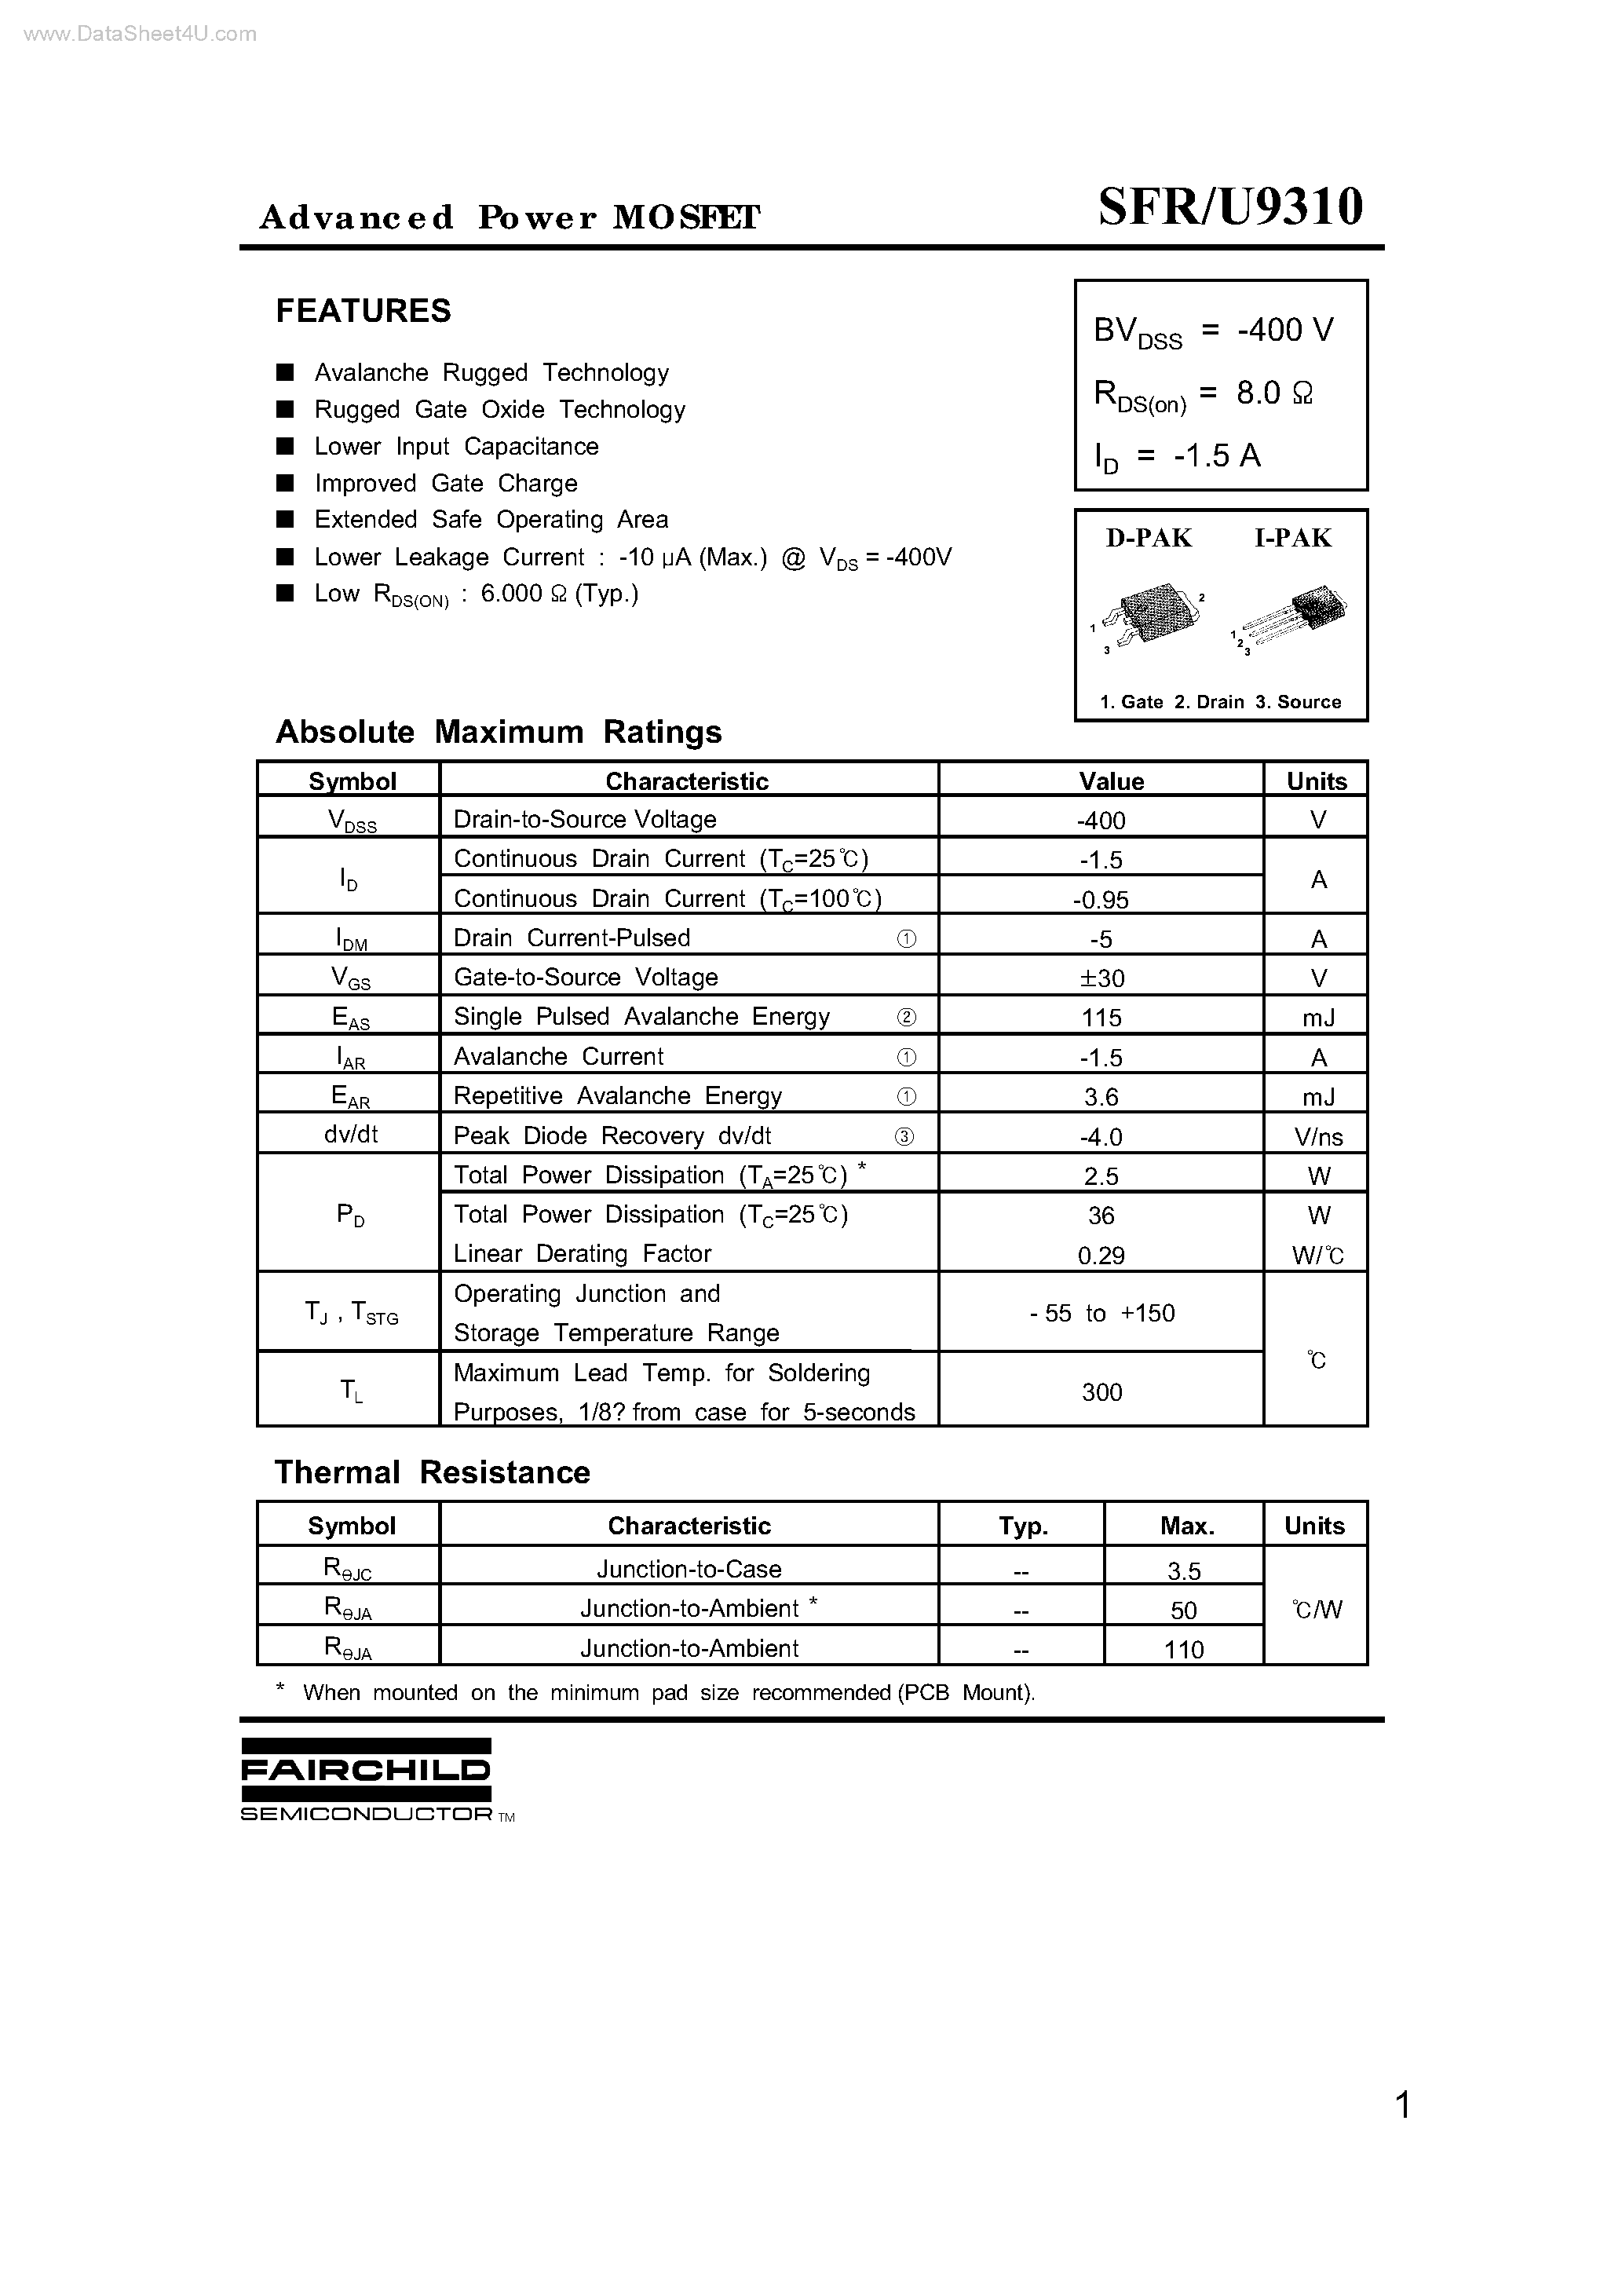 Даташит SFR/U9310 - Advanced Power MOSFET страница 1